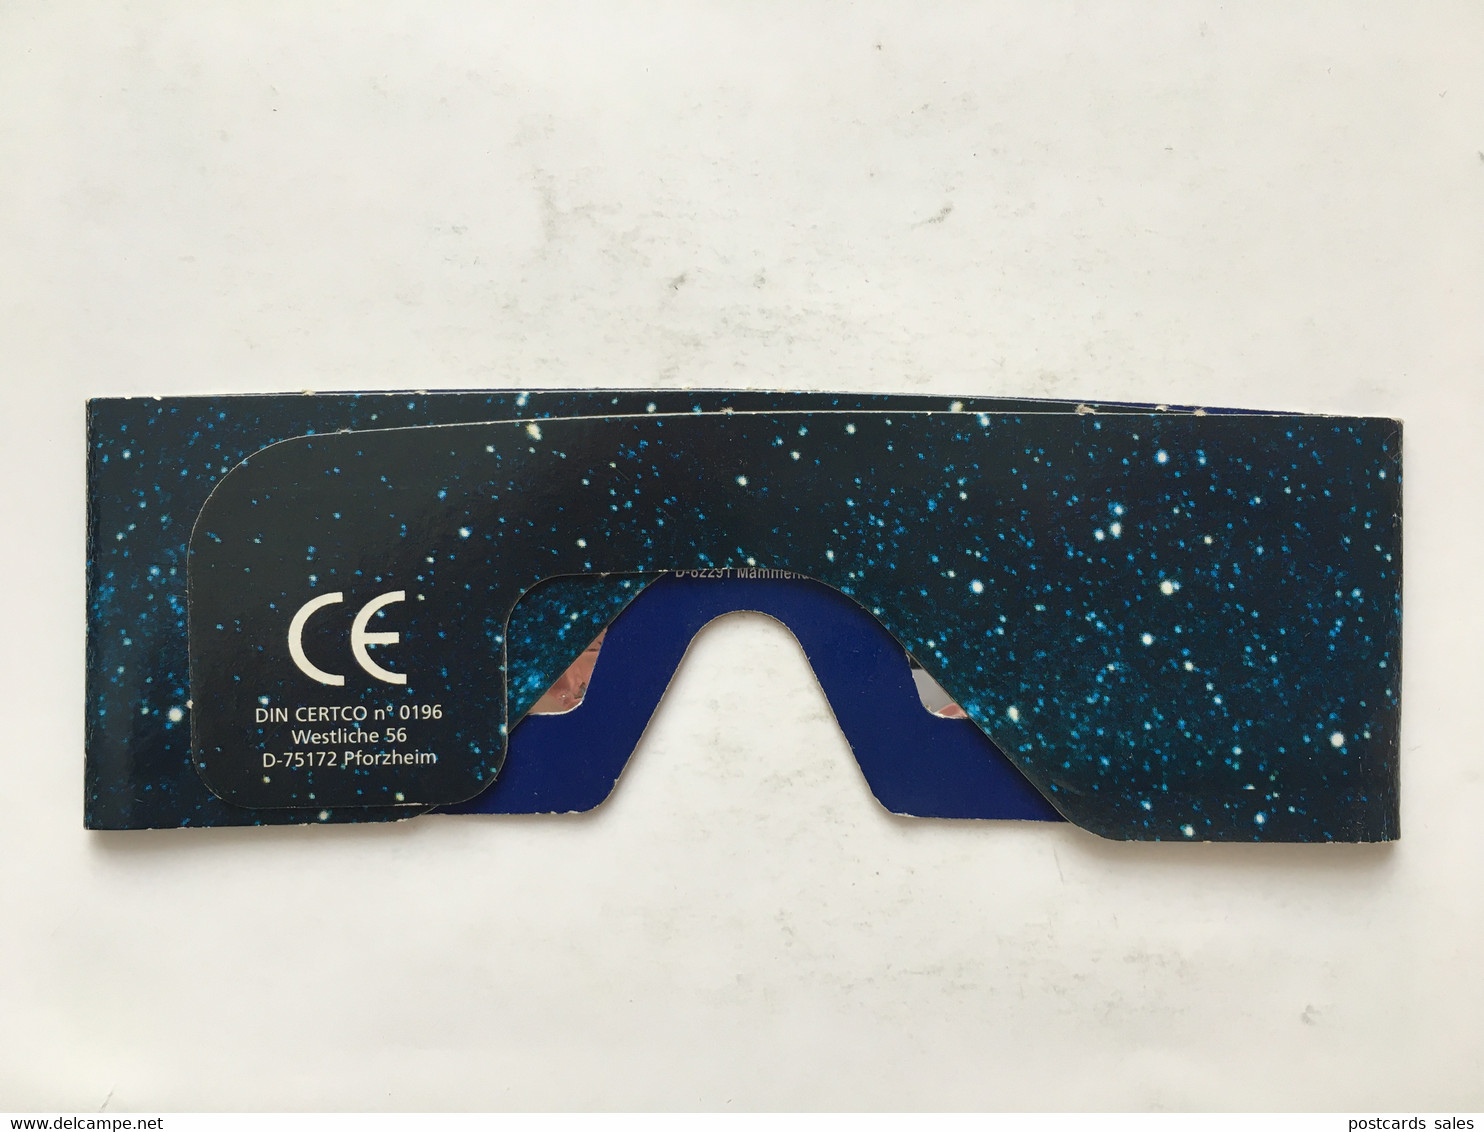 Zeiss Eclipse Glasses / Lunettes D'éclipse / Eclipse-Brille - Societe Astronomique De France - Pforzheim Mammendorf - Medisch En Tandheelkundig Materiaal